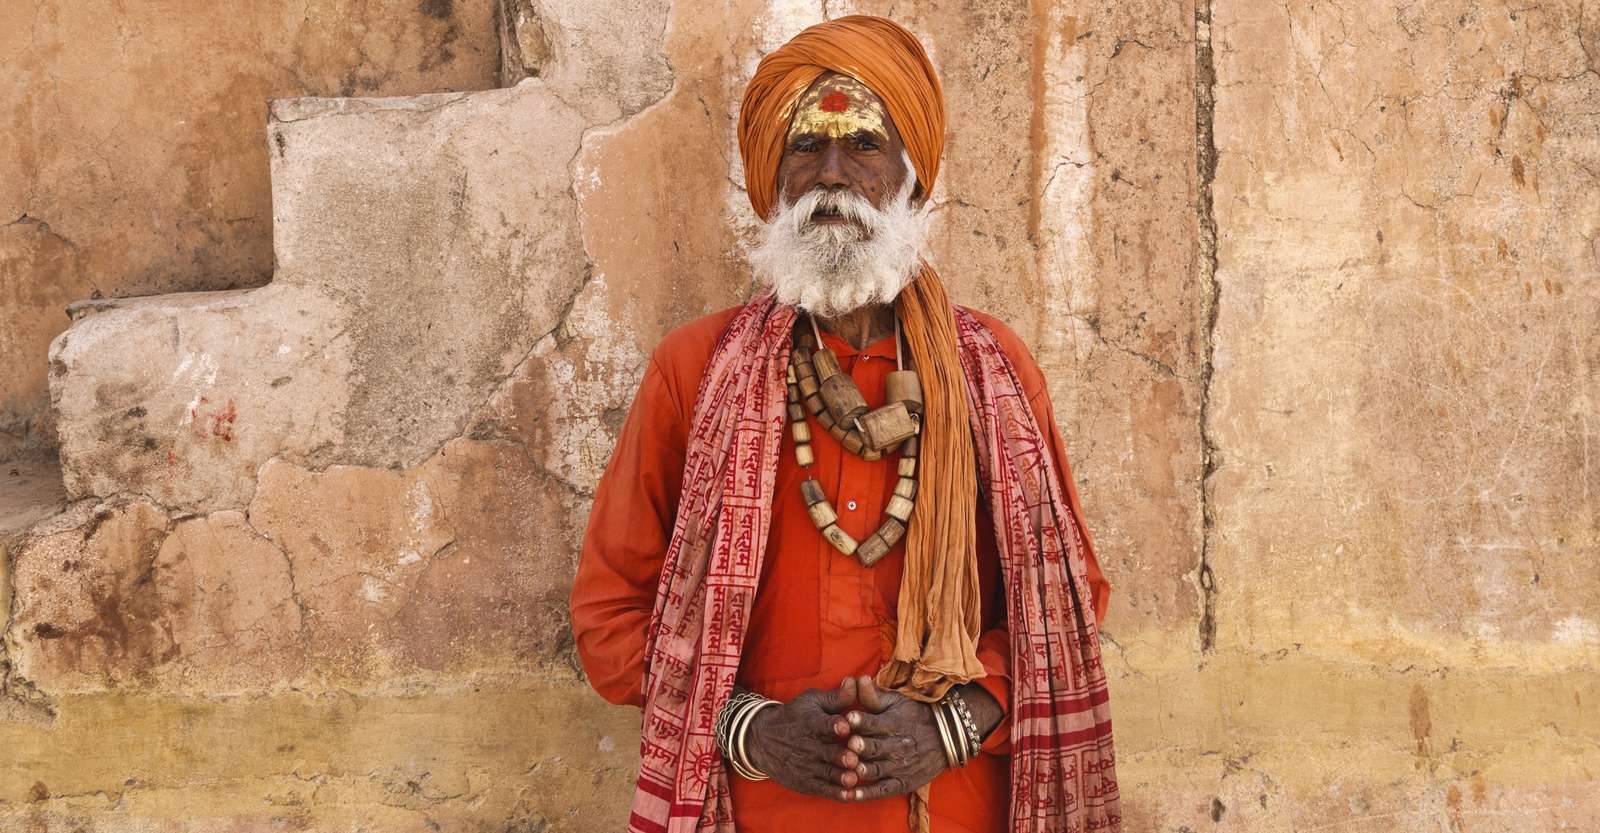 Local man, Jaipur, Rajasthan, India.